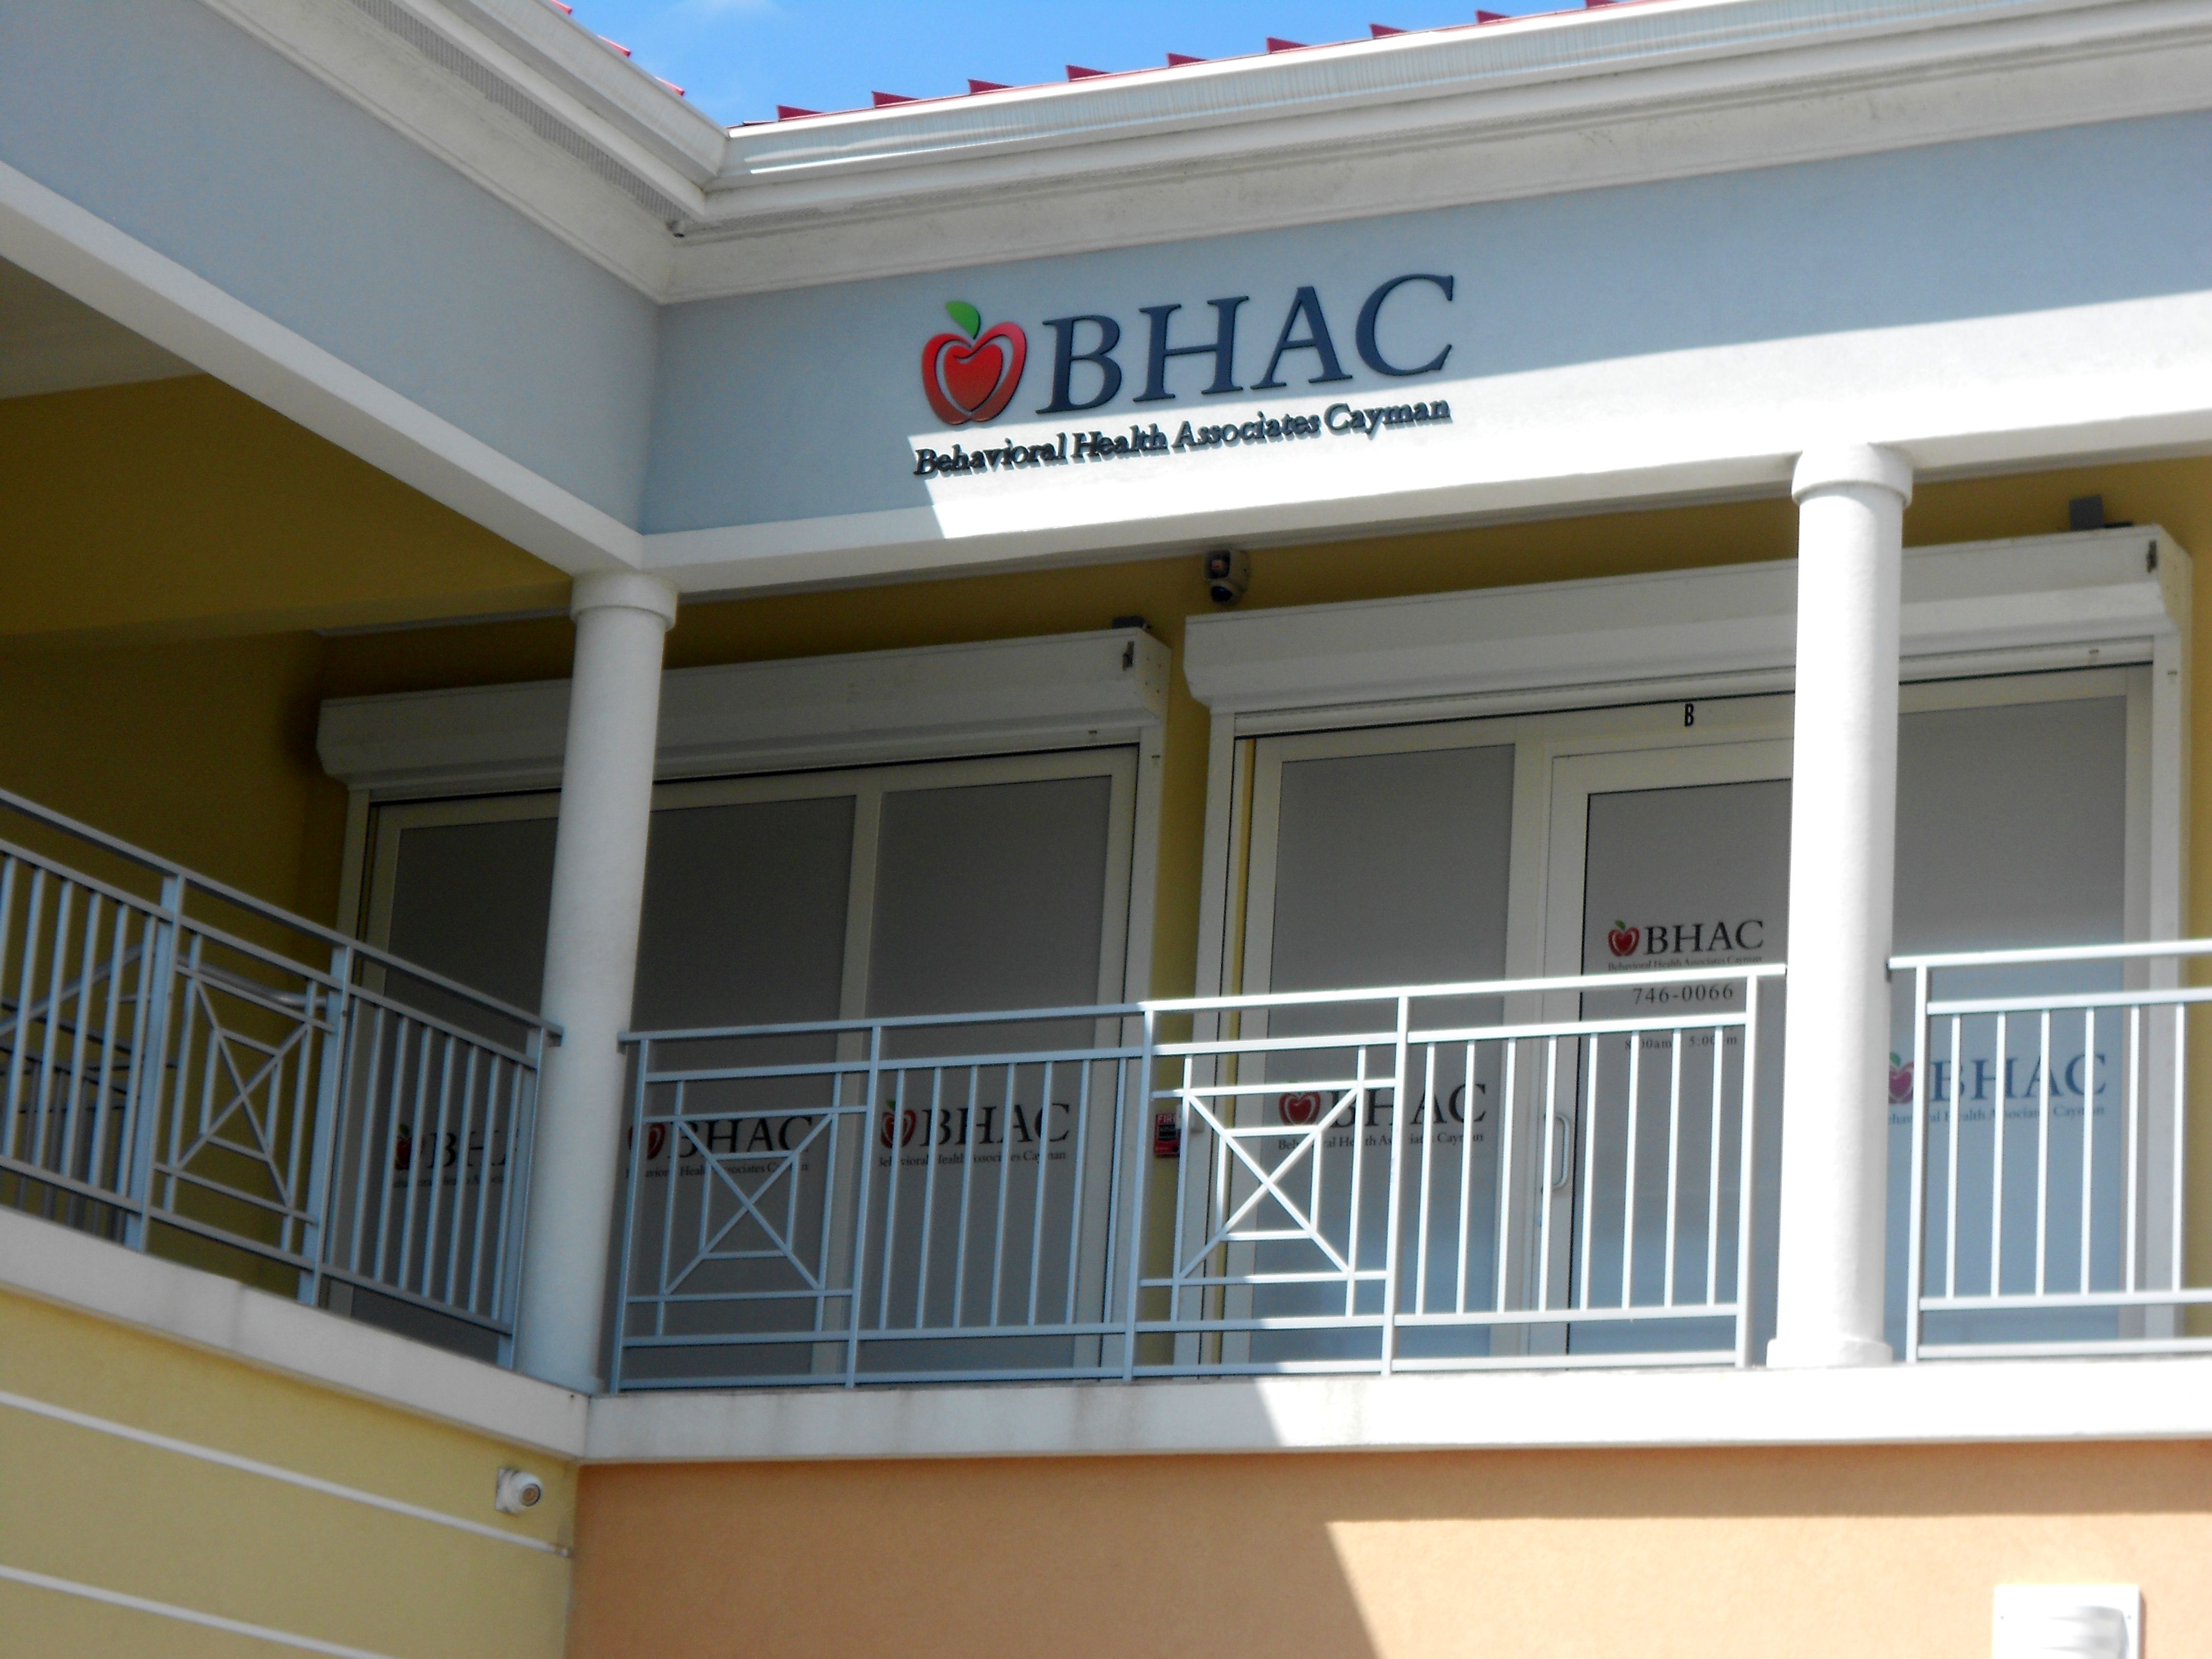 BHAC (Behavioral Health Associates Cayman) - Doctors